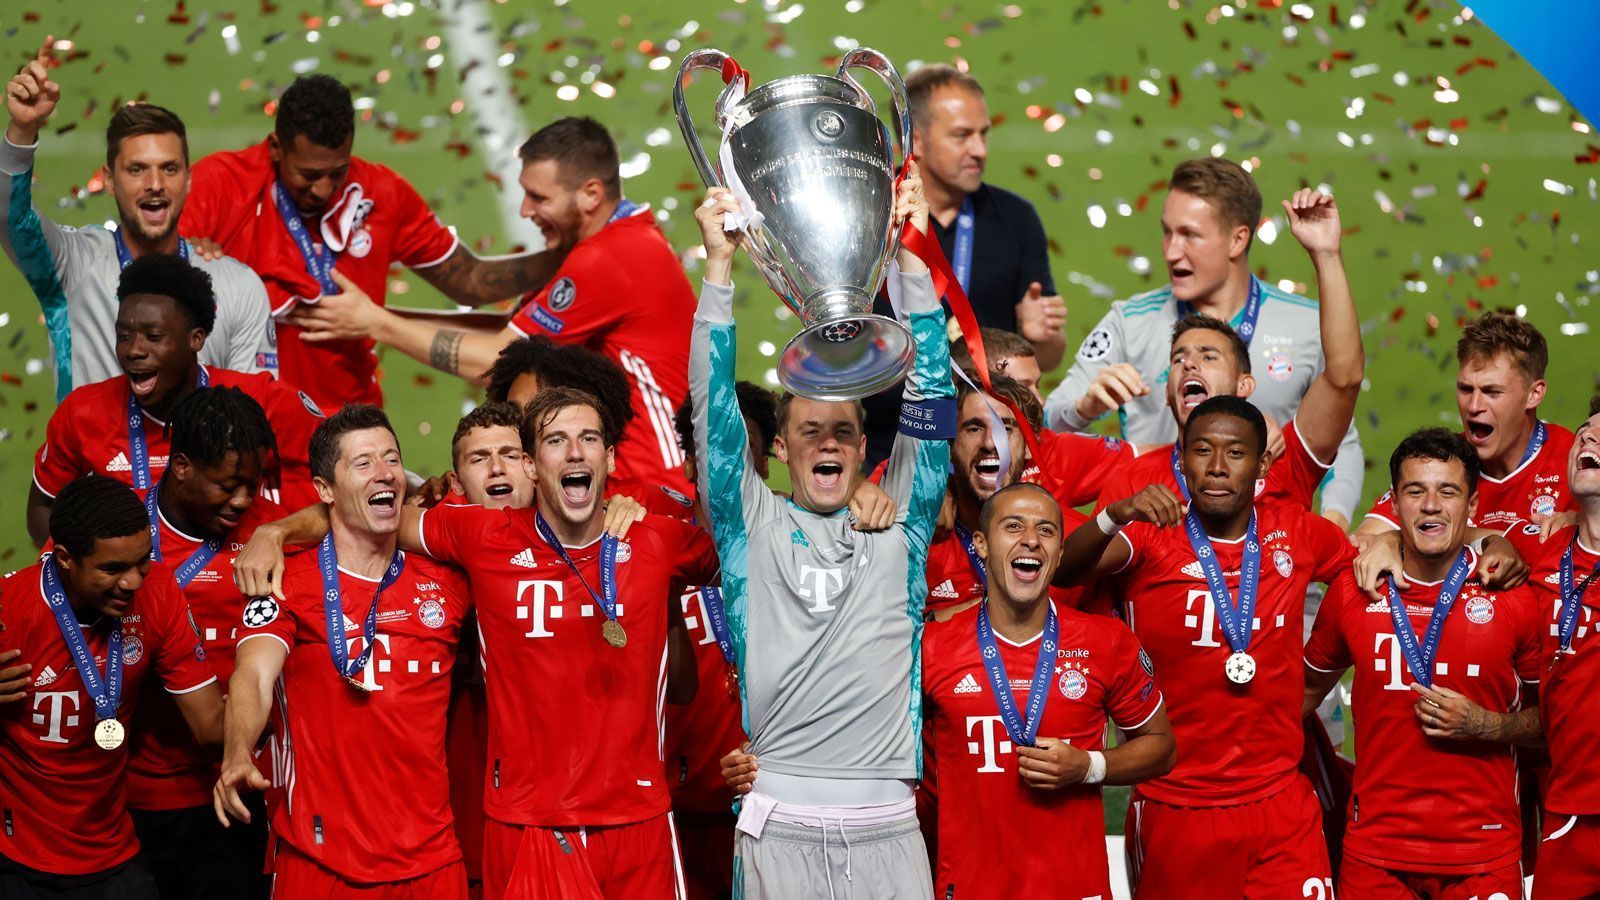 
                <strong>Platz 1: Bayern München</strong><br>
                 - Punkte 2015/16: 29,000 - Punkte 2016/17: 22,000 - Punkte 2017/18: 29,000 - Punkte 2018/19: 20,000 - Punkte 2019/20: 36,000 - Gesamtpunktzahl: 136,000
              